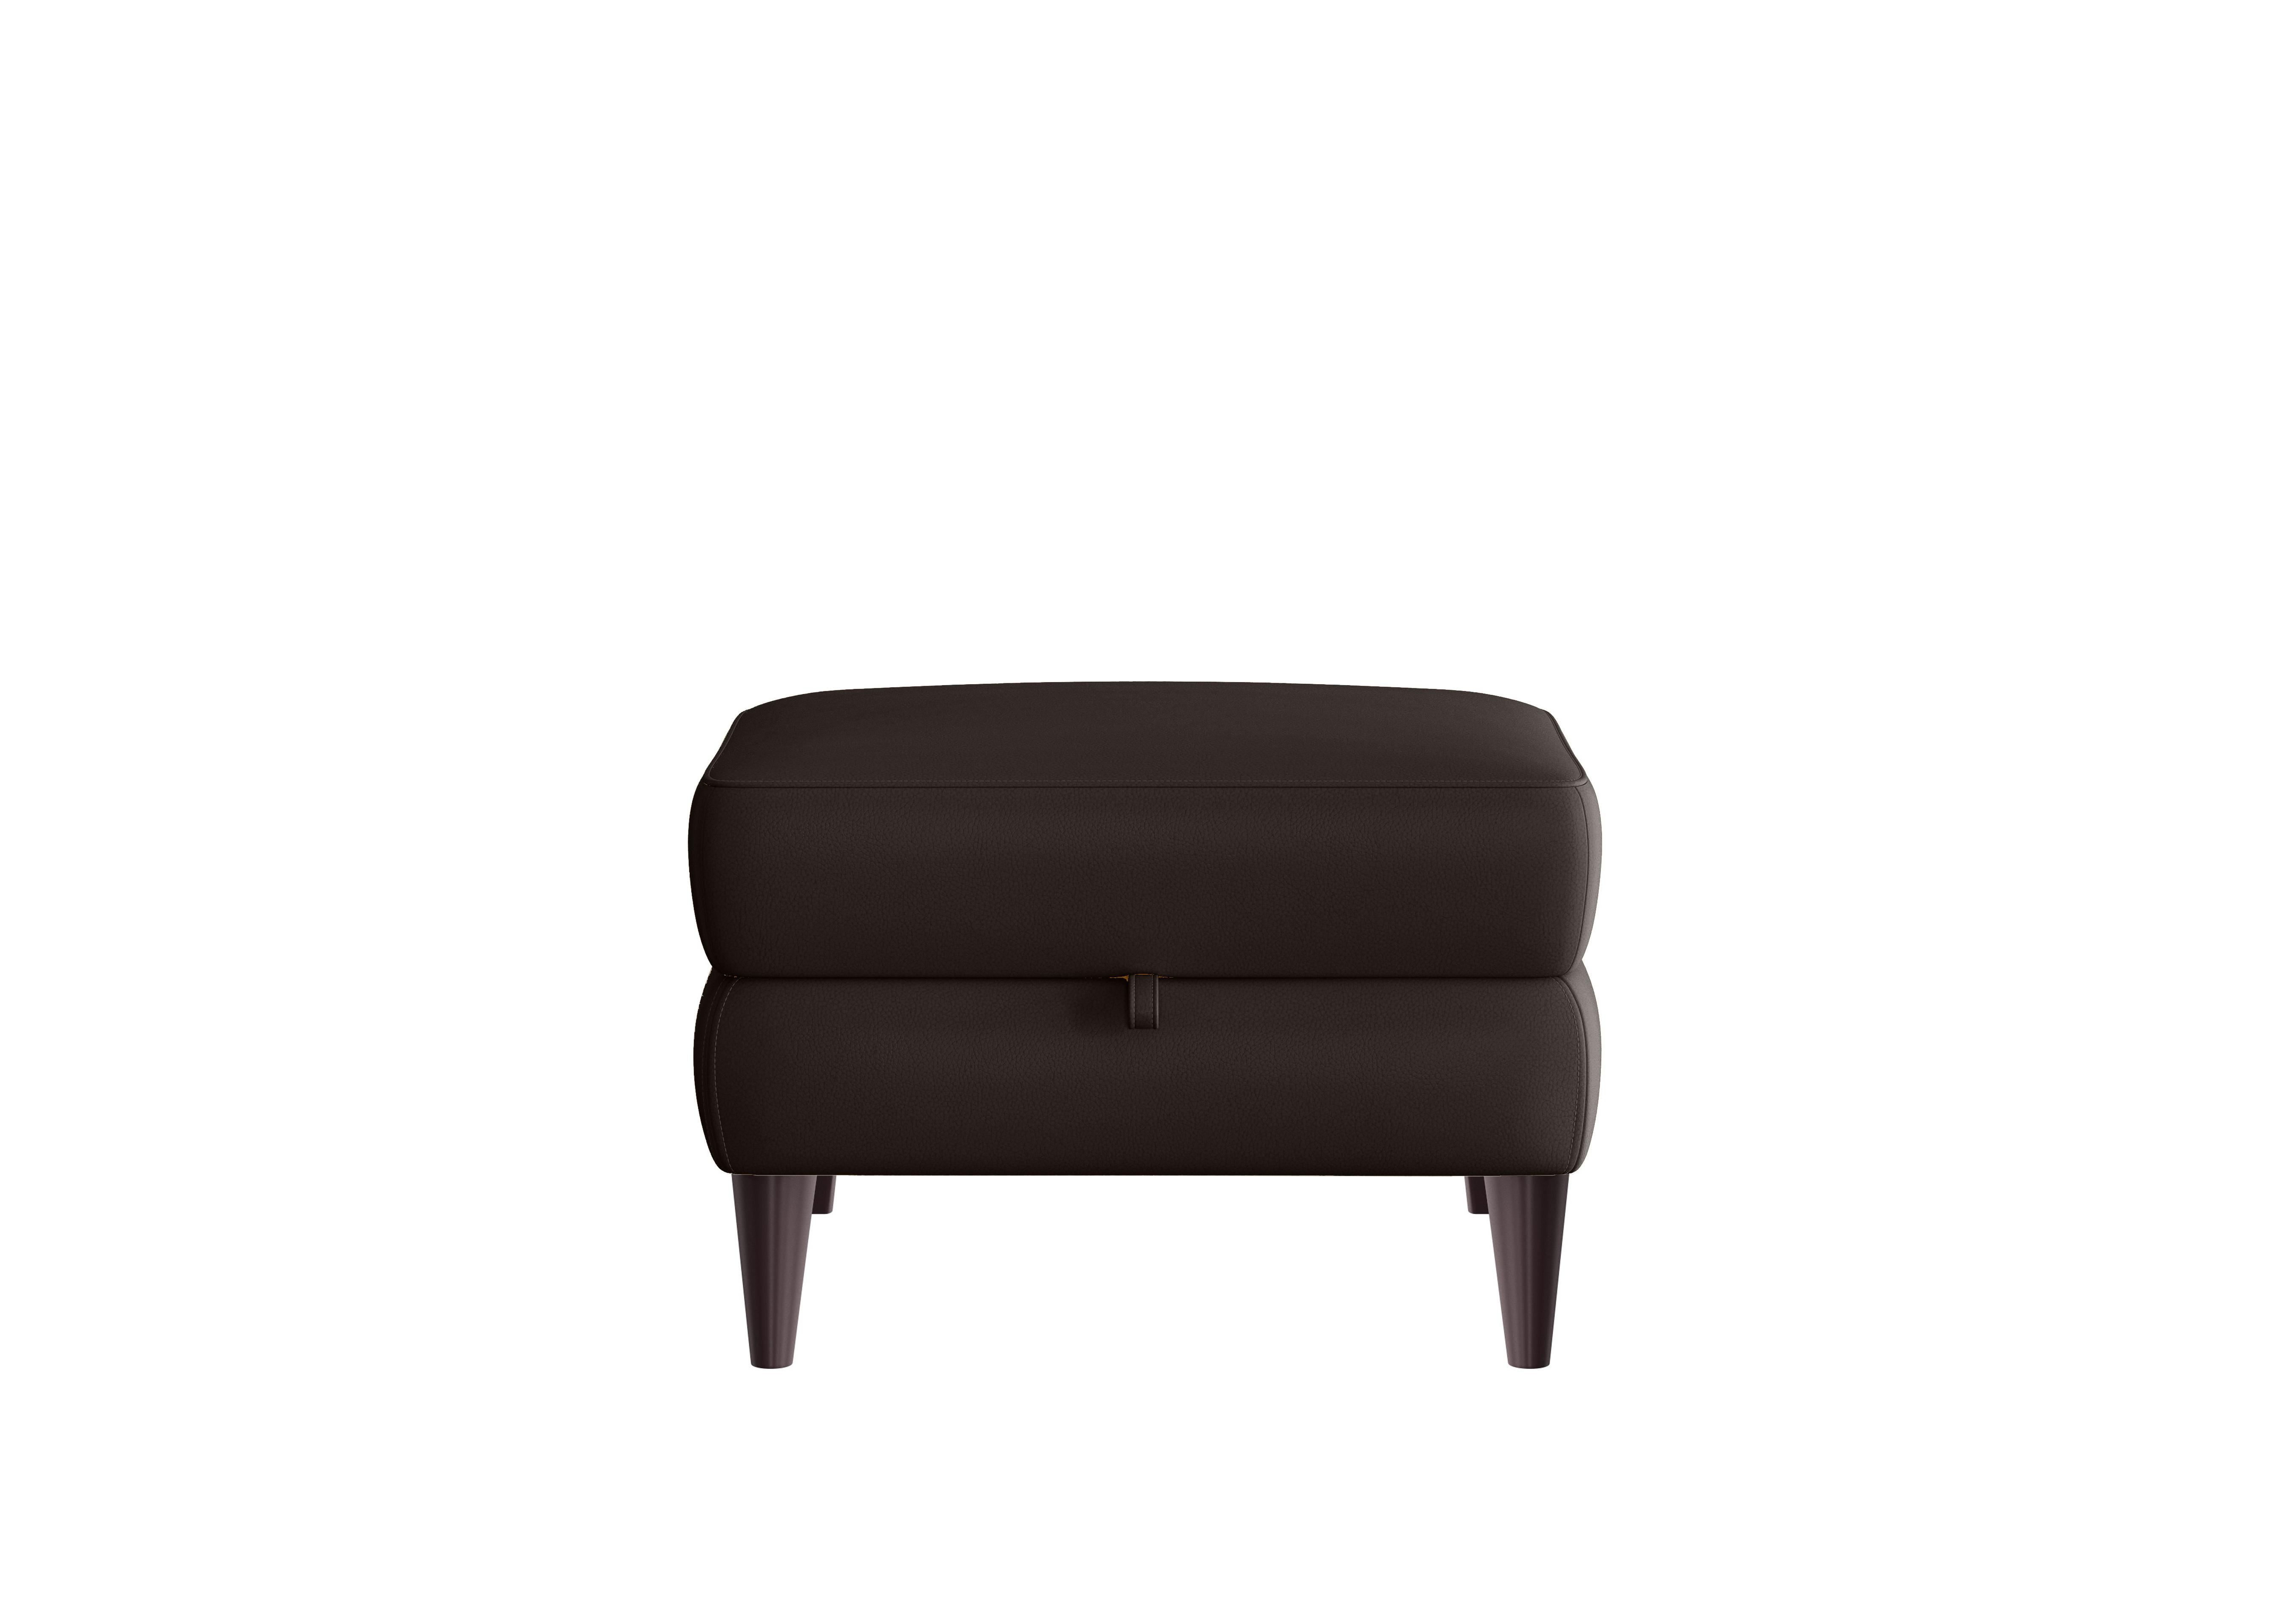 Compact Collection Klein Leather Storage Footstool in Bv-1748 Dark Chocolate on Furniture Village